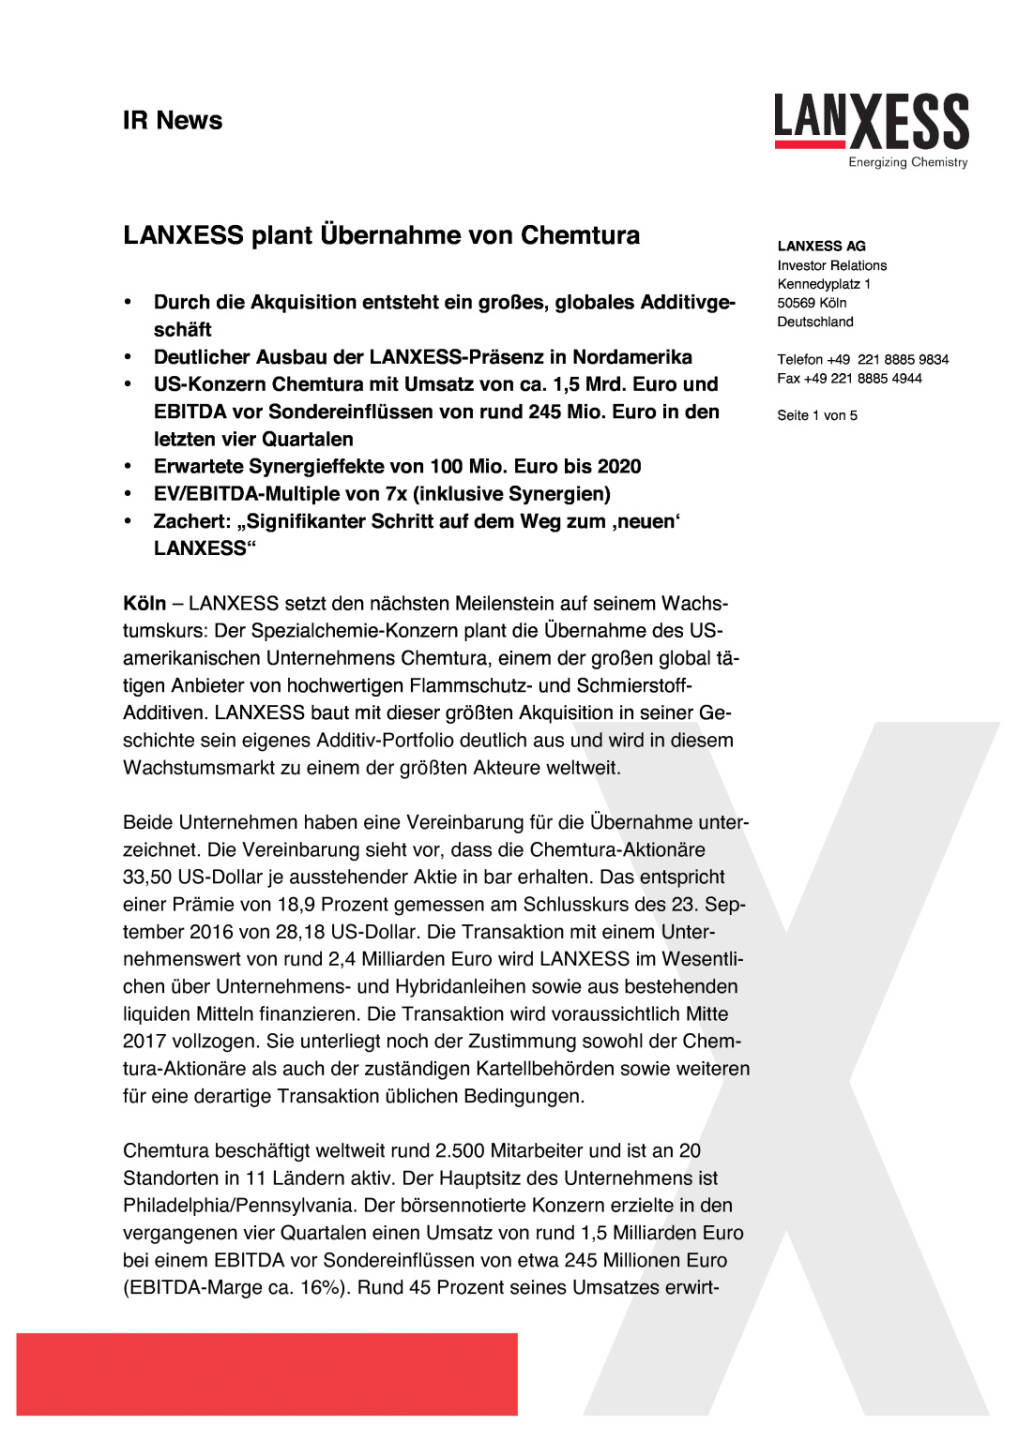 Lanxess plant Übernahme von Chemtura, Seite 1/5, komplettes Dokument unter http://boerse-social.com/static/uploads/file_1828_lanxess_plant_übernahme_von_chemtura.pdf